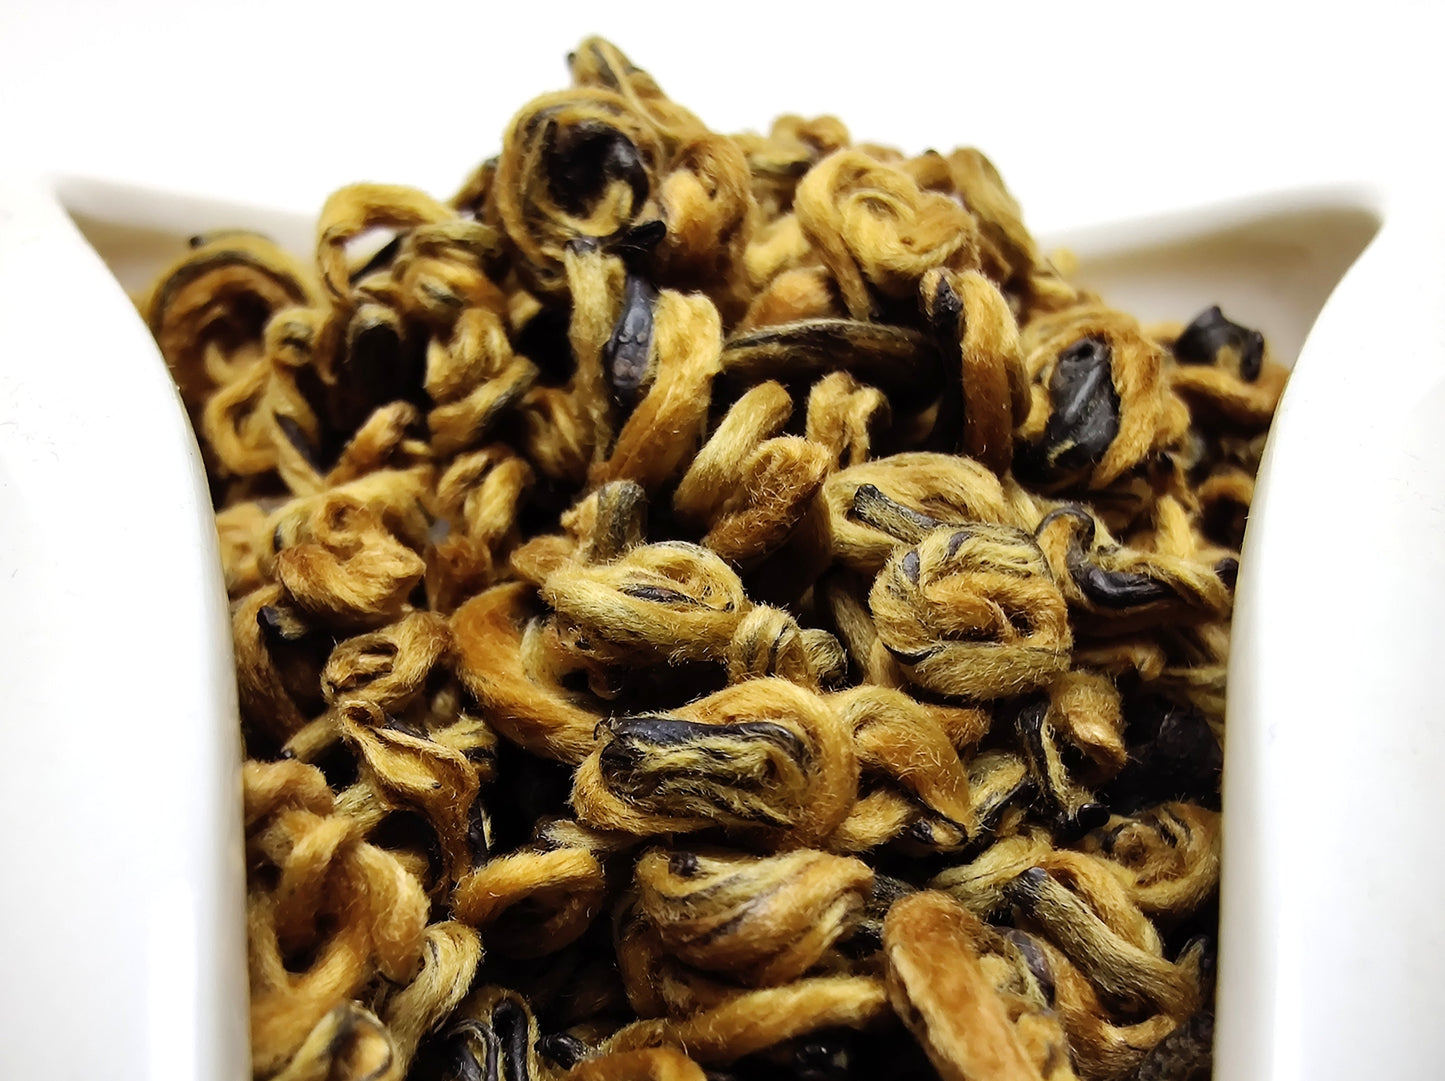 Dian Hong Jin Luo - Golden Snail Yunnan Red Tea